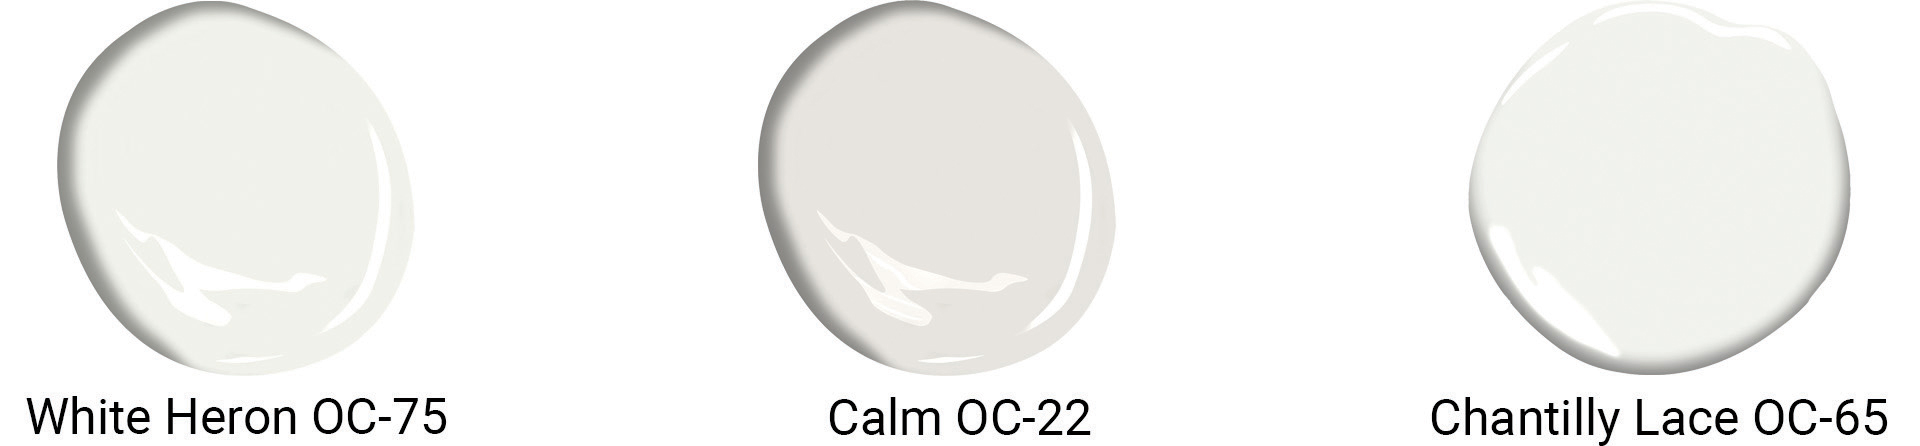 07c-cool-whites-1.jpg (110 KB)